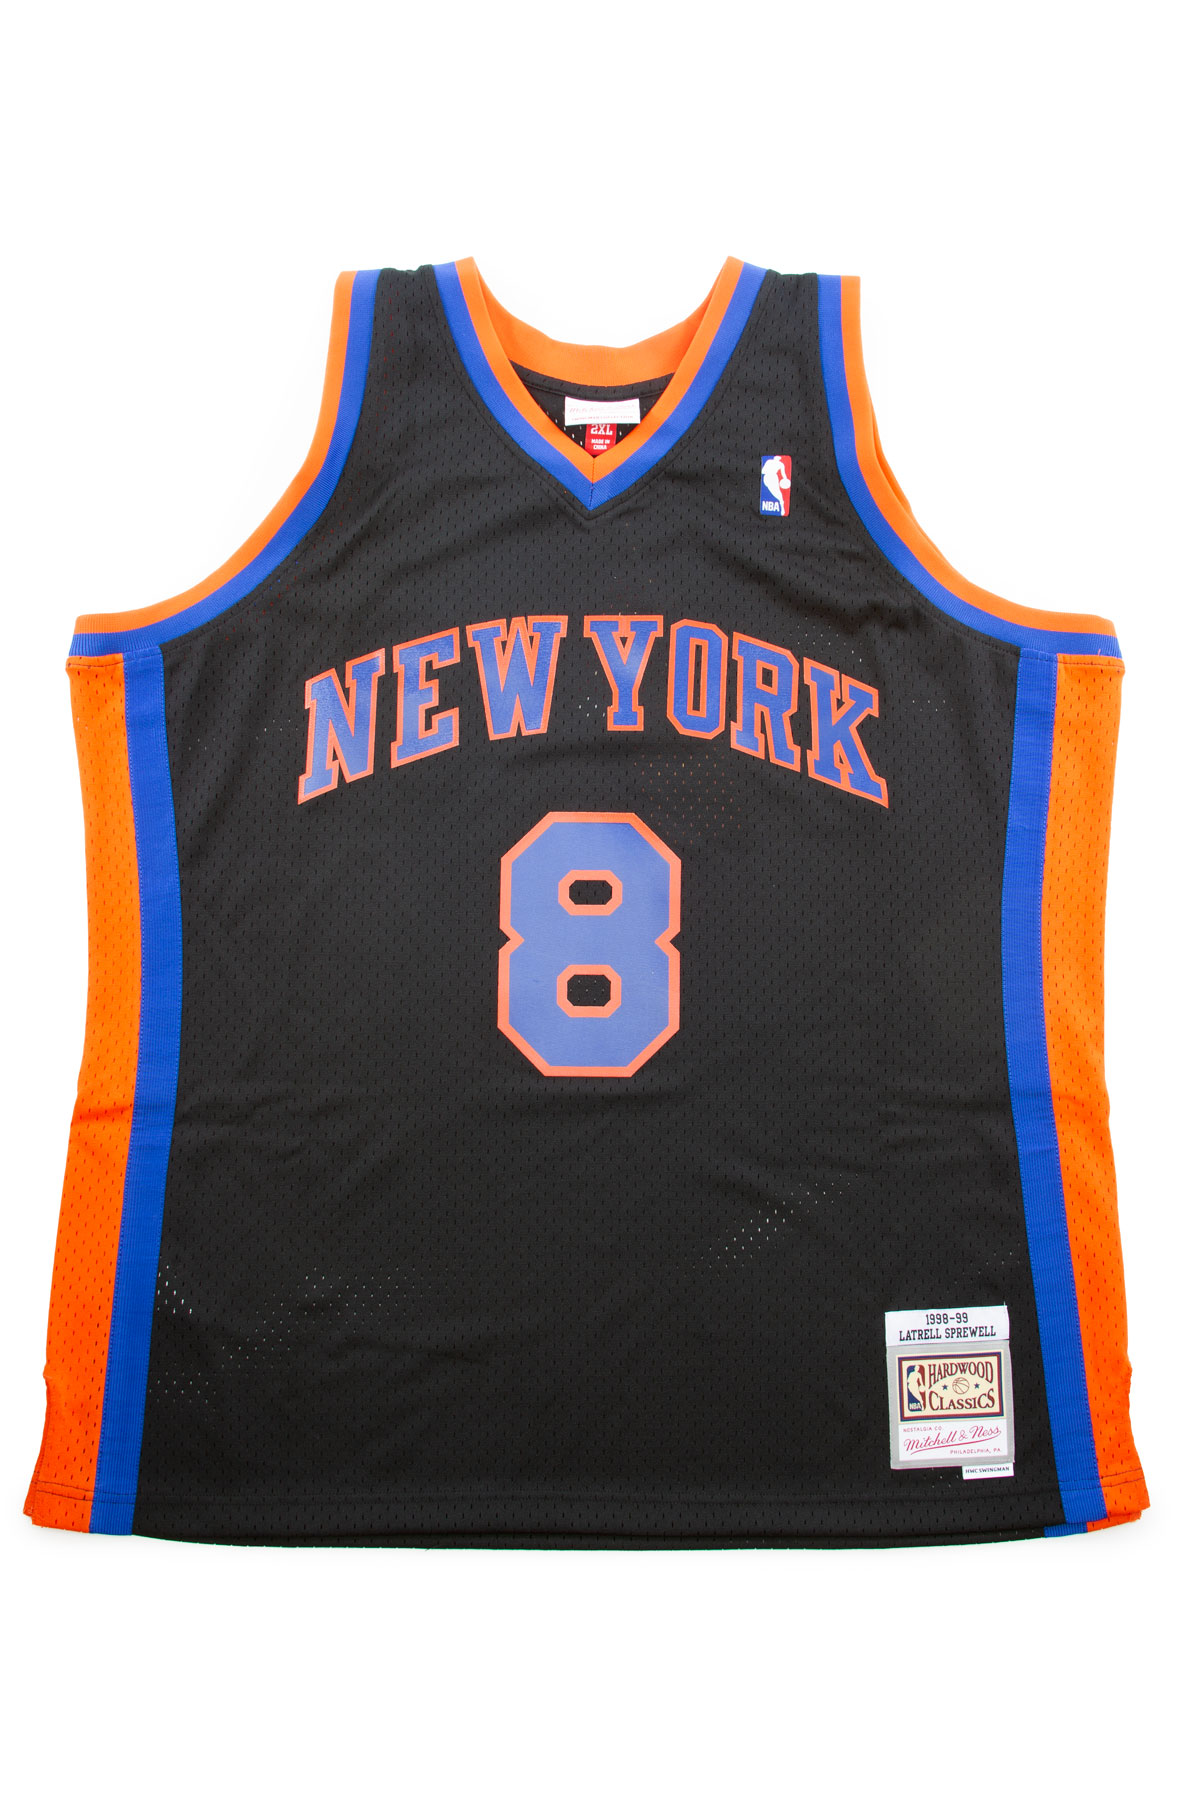 Knicks Latrell Sprewell Jersey size 52/2X